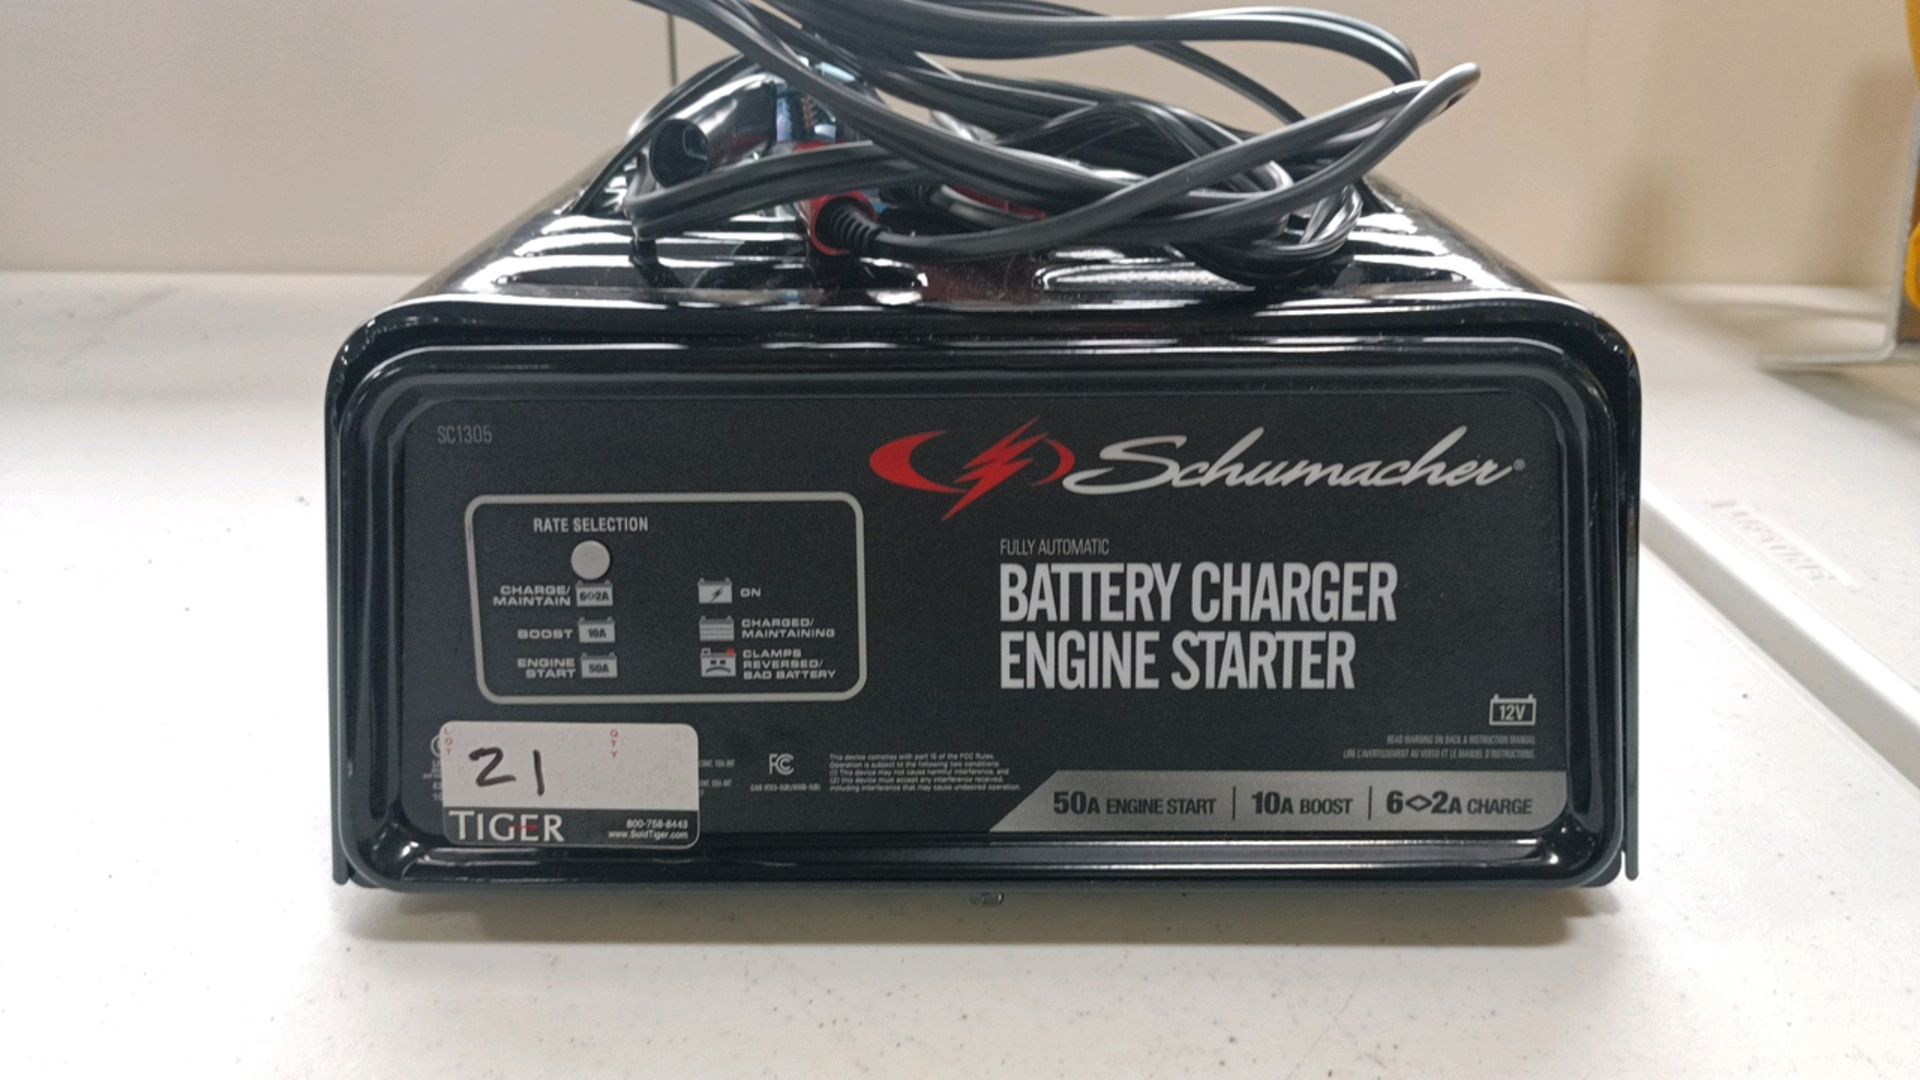 Battery Charger & Engine Starter